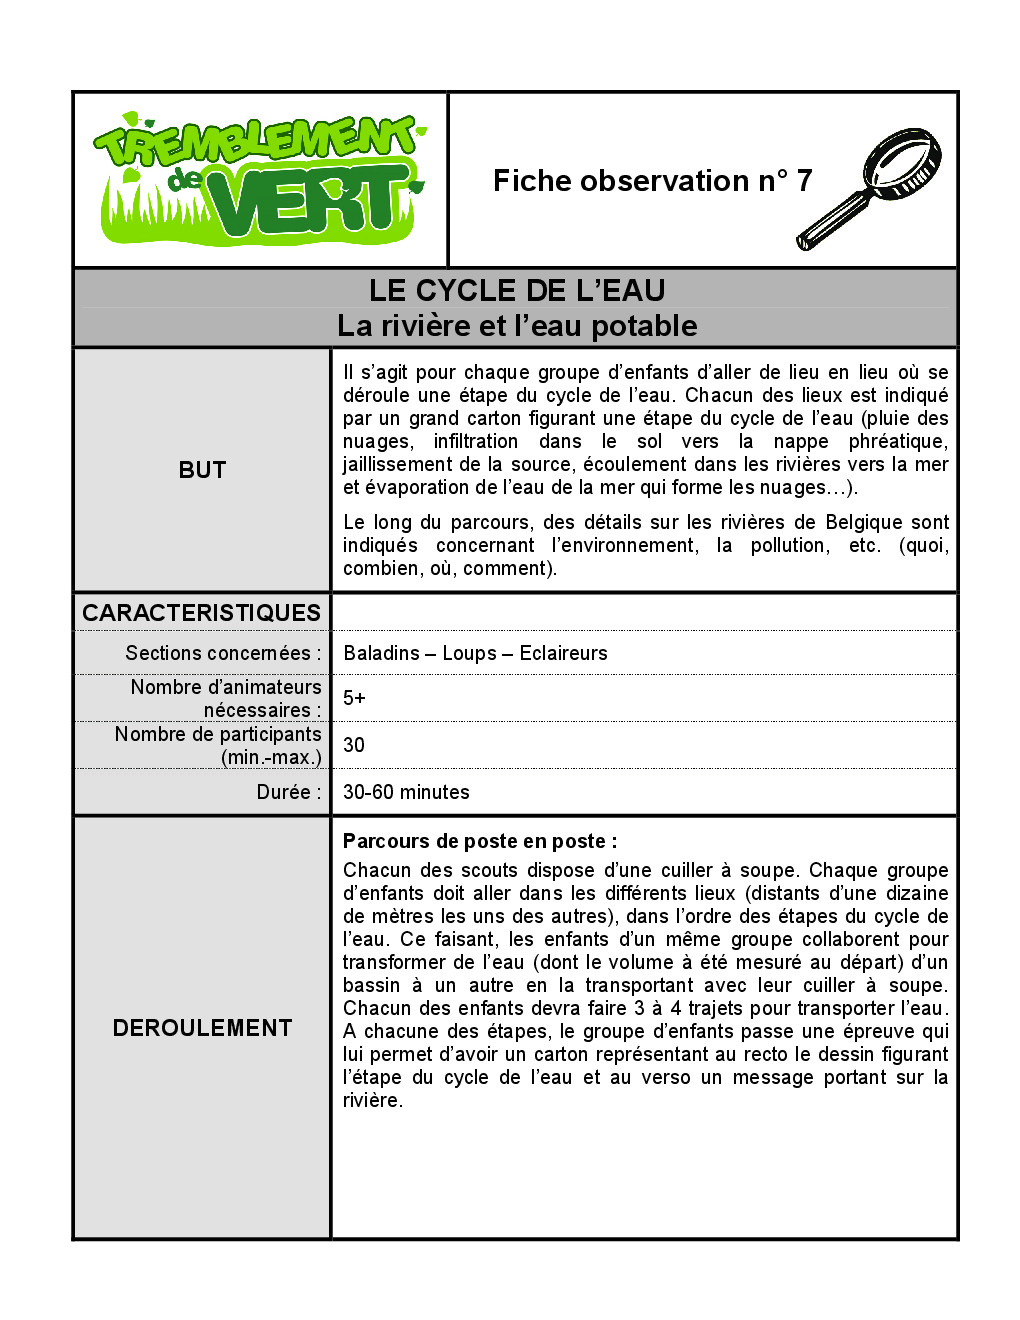 FT_TV_OBS_07_La_riviere.pdf